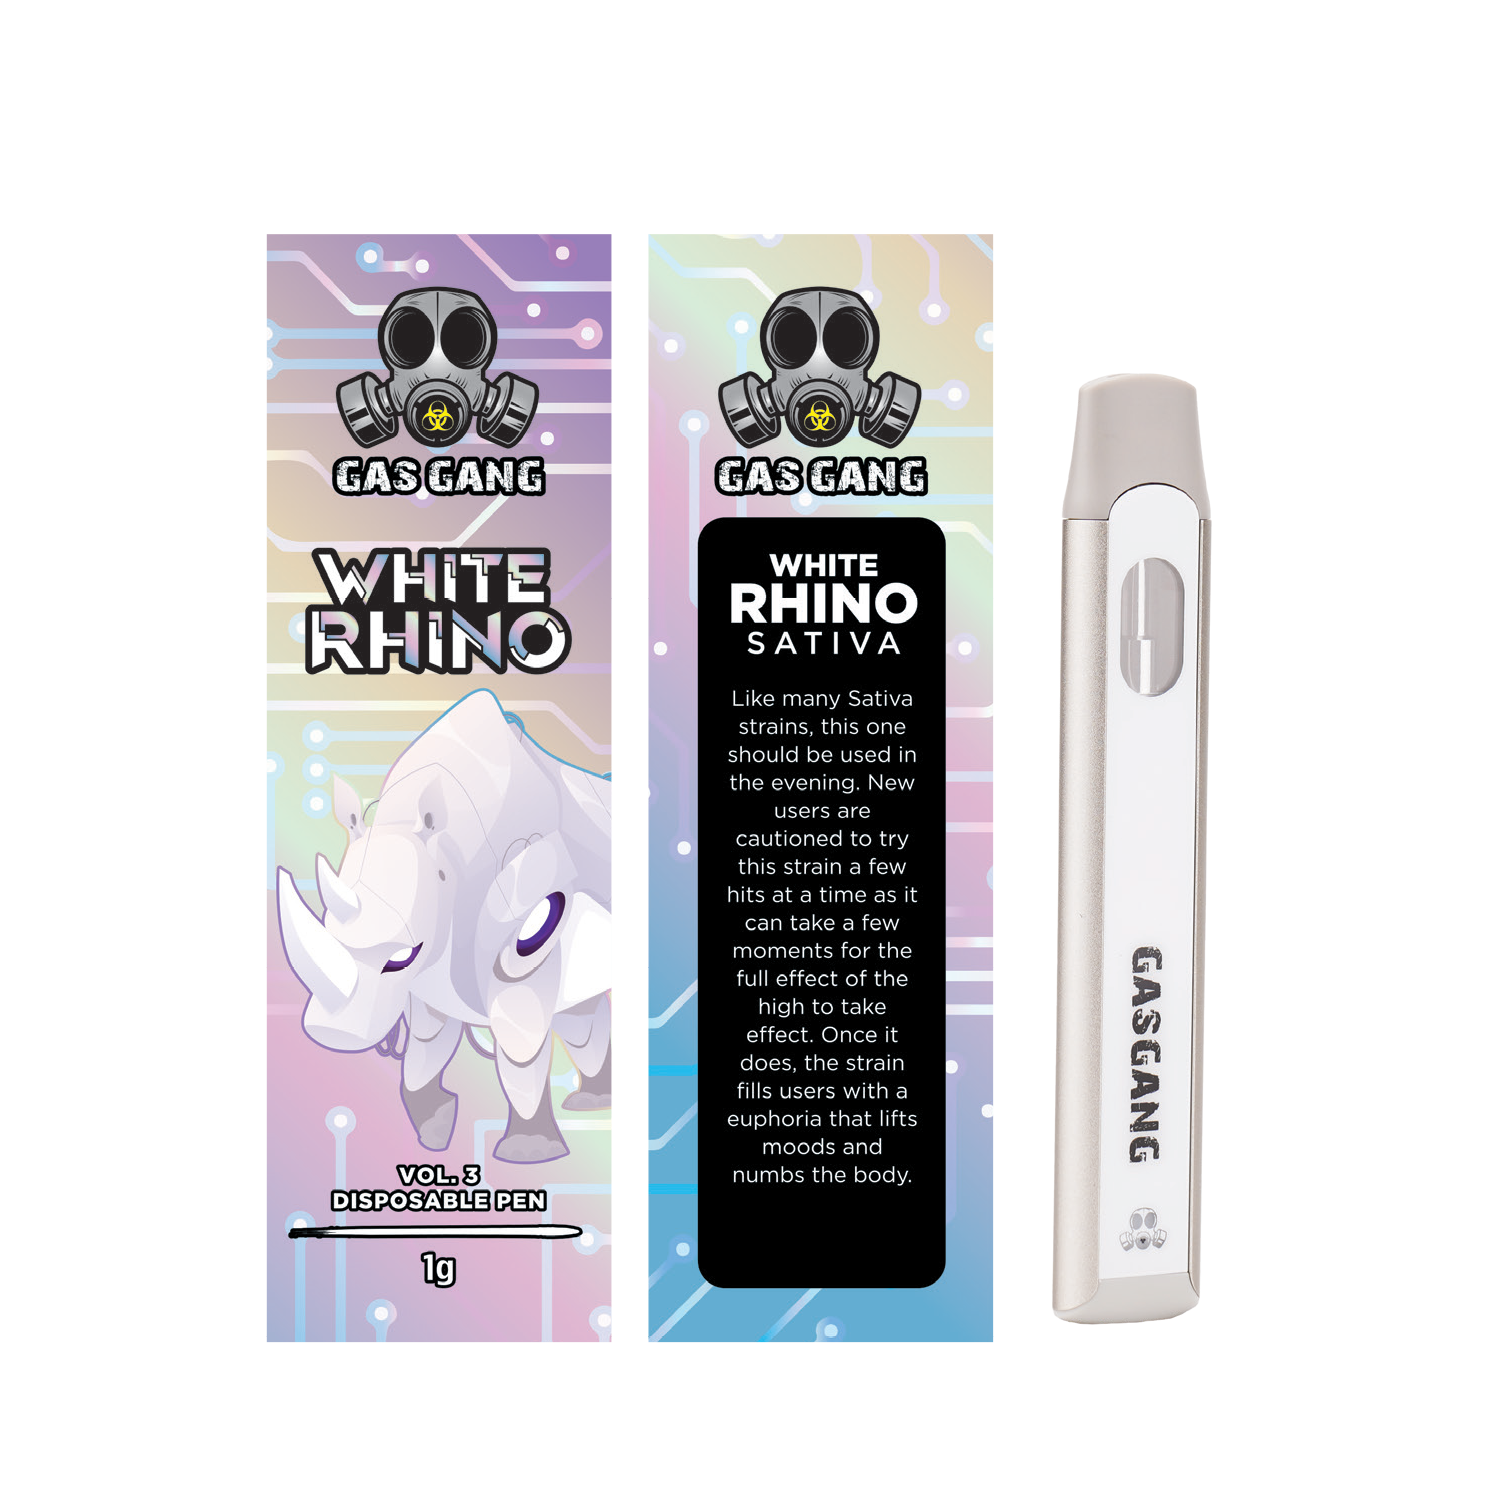 Buy Gas Gang - White Rhino Disposable Pen at Wccannabis Online Shop